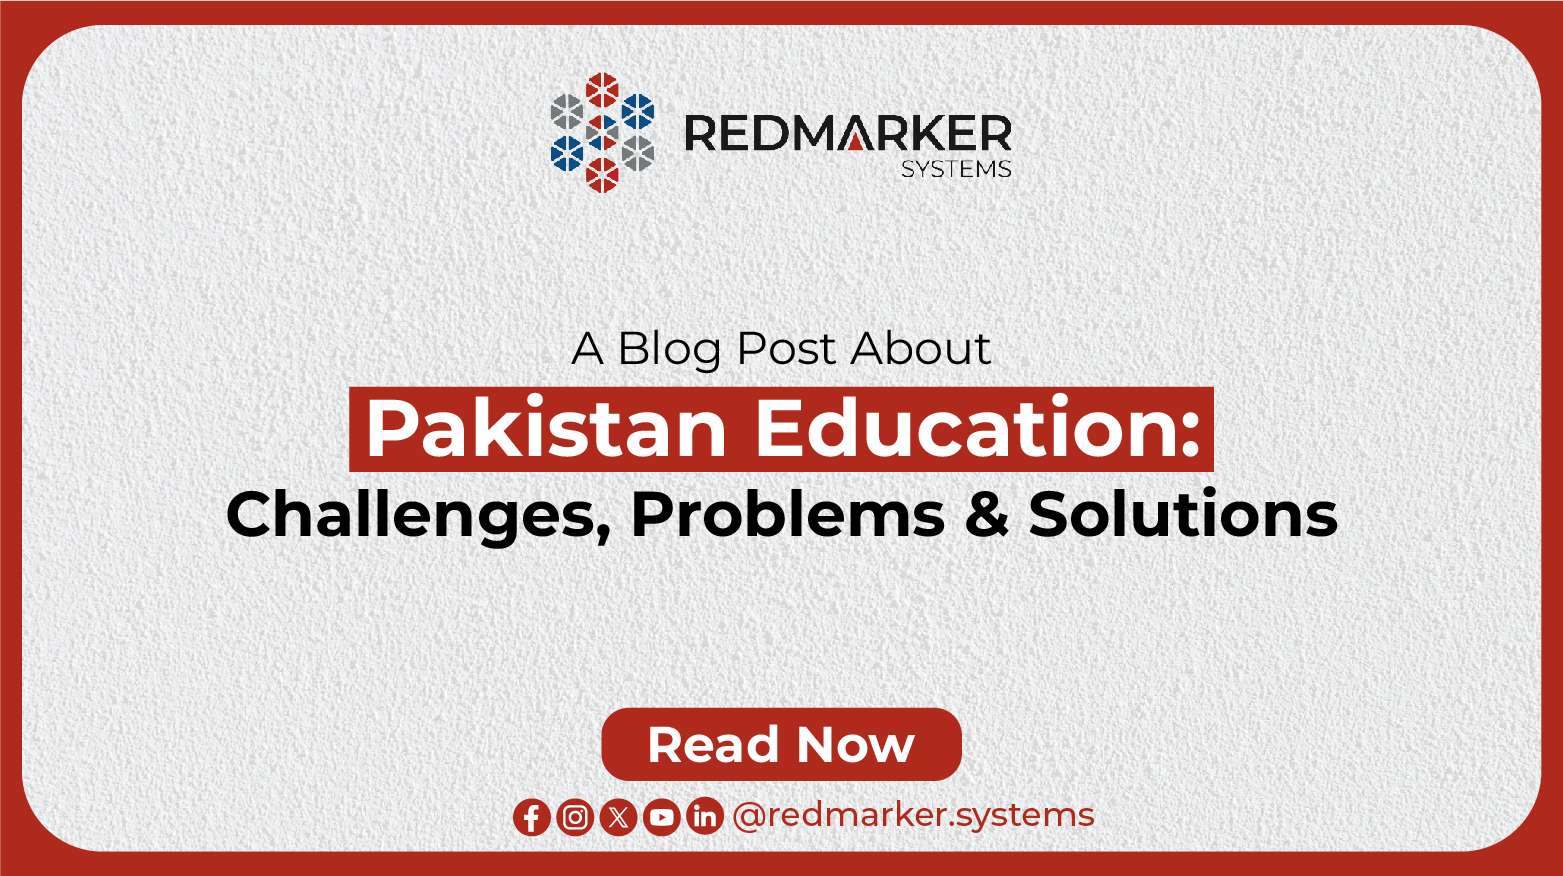 Pakistan Education - Challenges, Problems & Solutions